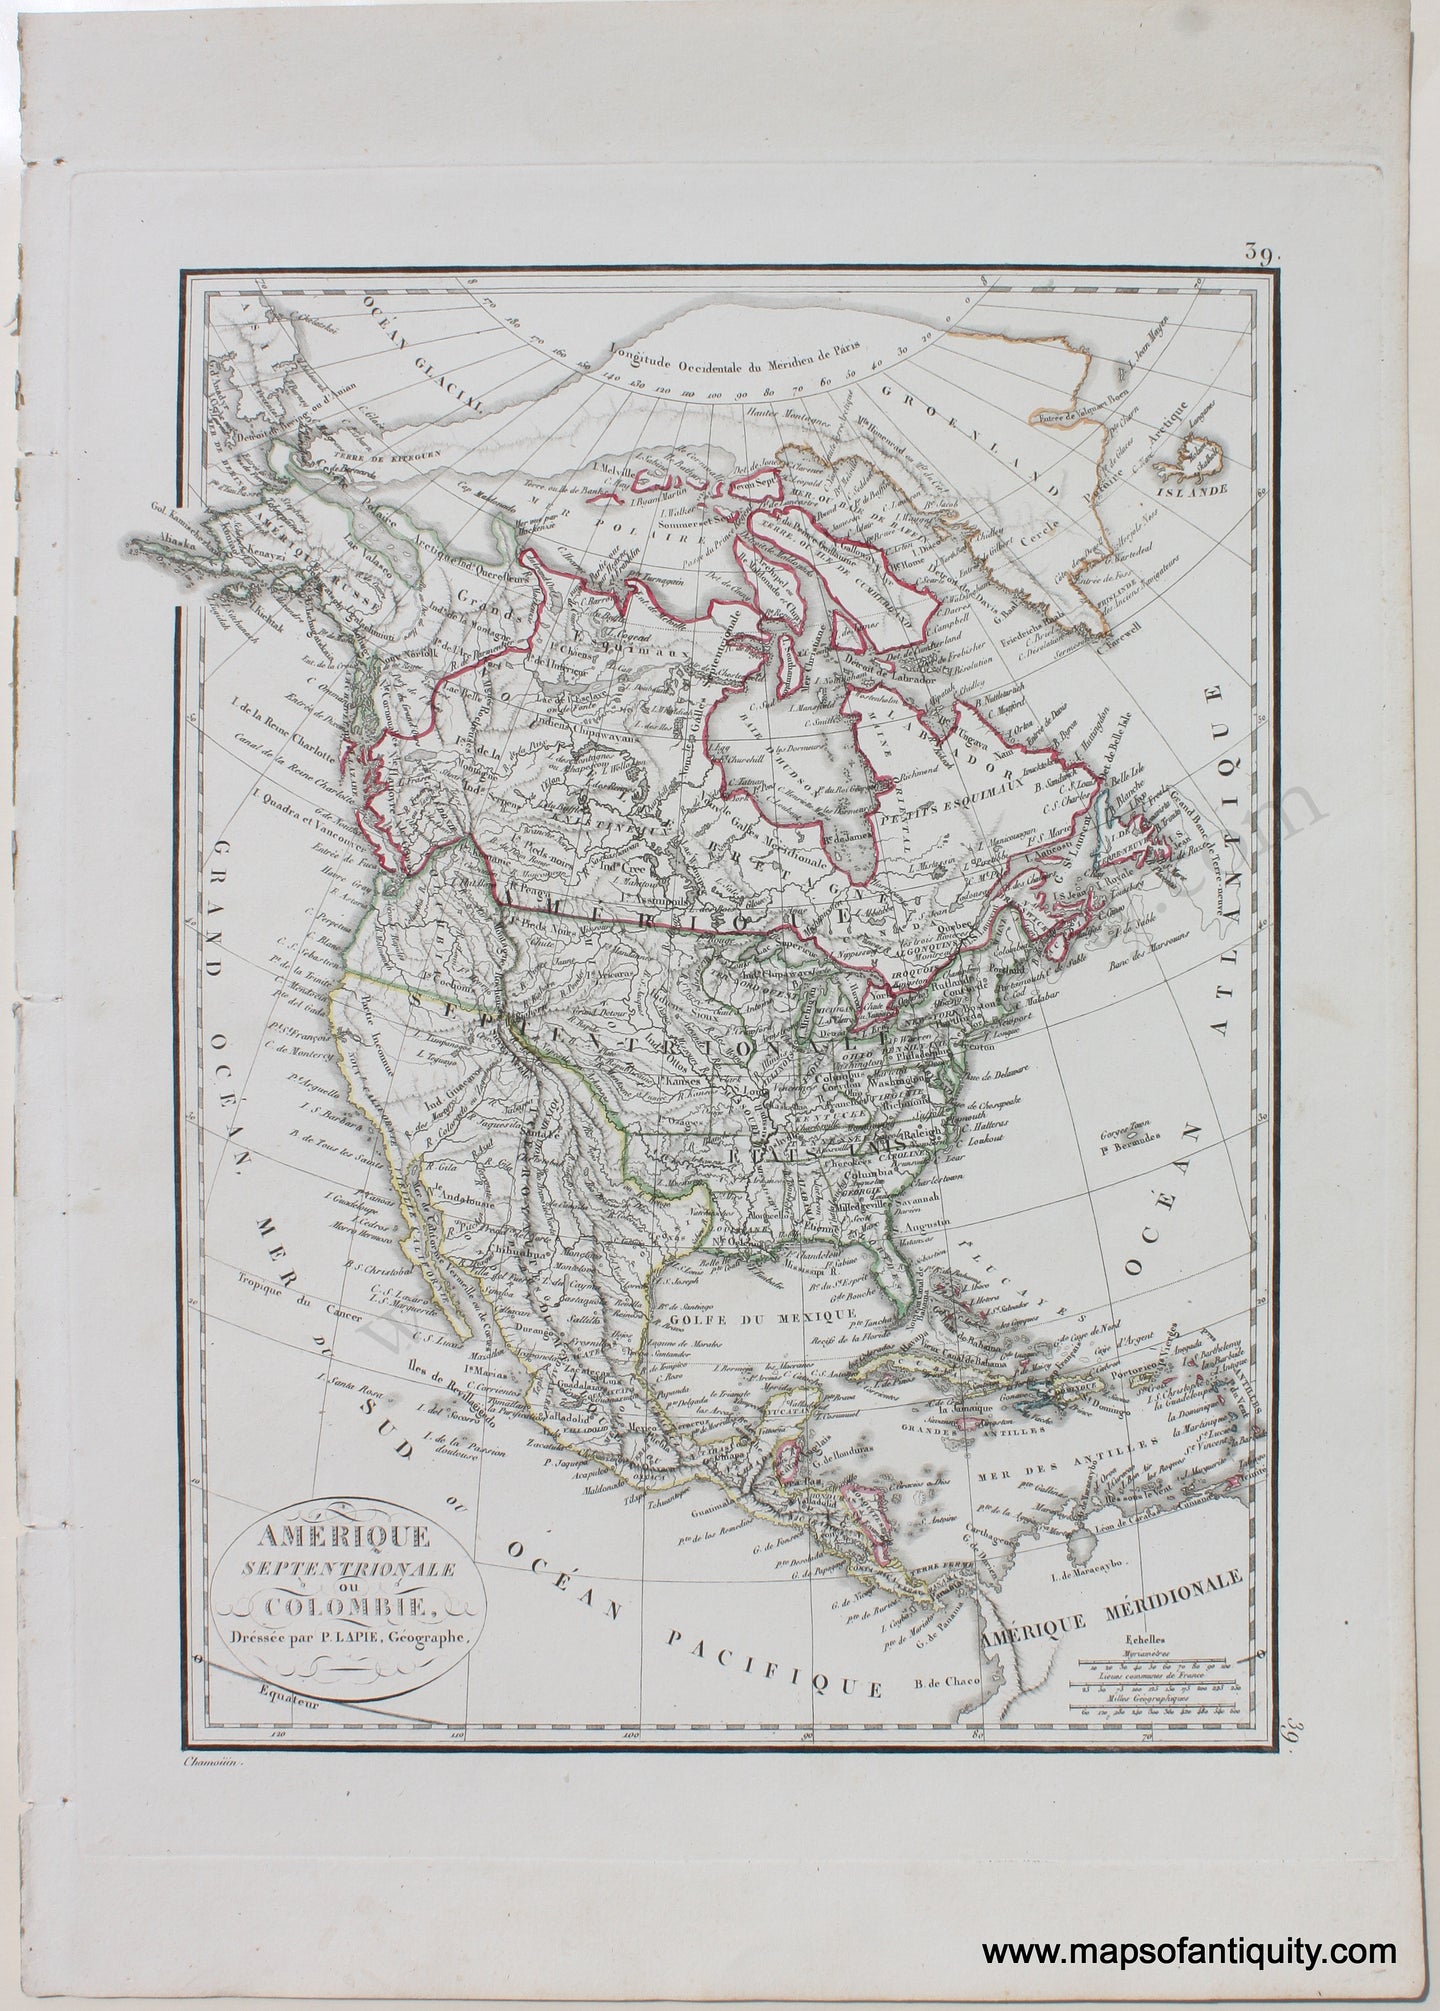 Antique-Hand-Colored-Map-Amerique-Septentrionale-ou-Colombie-North-America--1824-Lapie-Maps-Of-Antiquity-1800s-19th-century